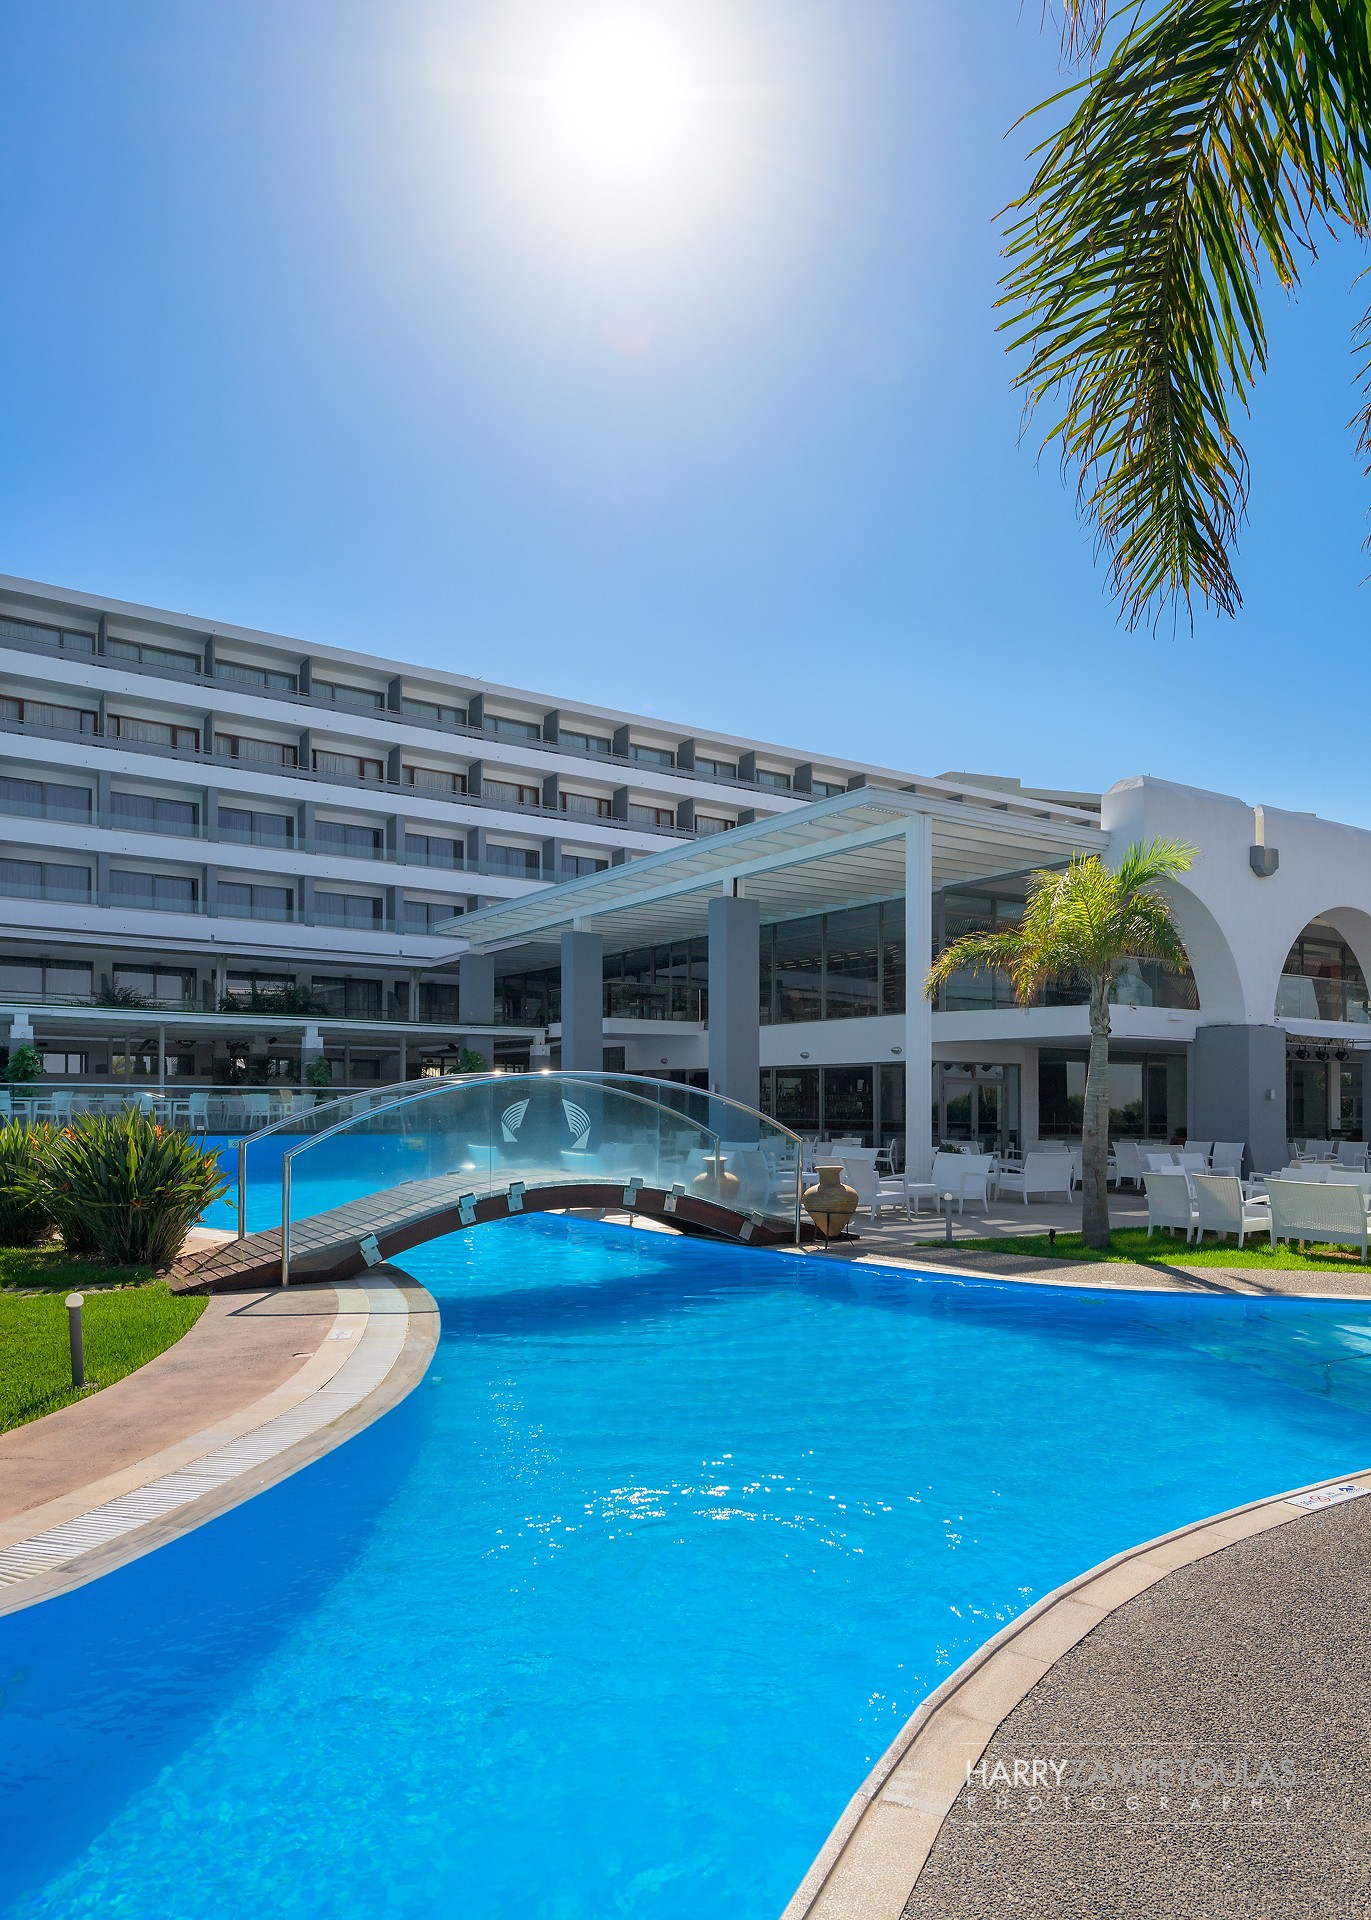 Oceanis-Hotel-Rhodes-Harry-Zampetoulas-Photography-25 Oceanis Hotel Rhodes - Hotel Photography 